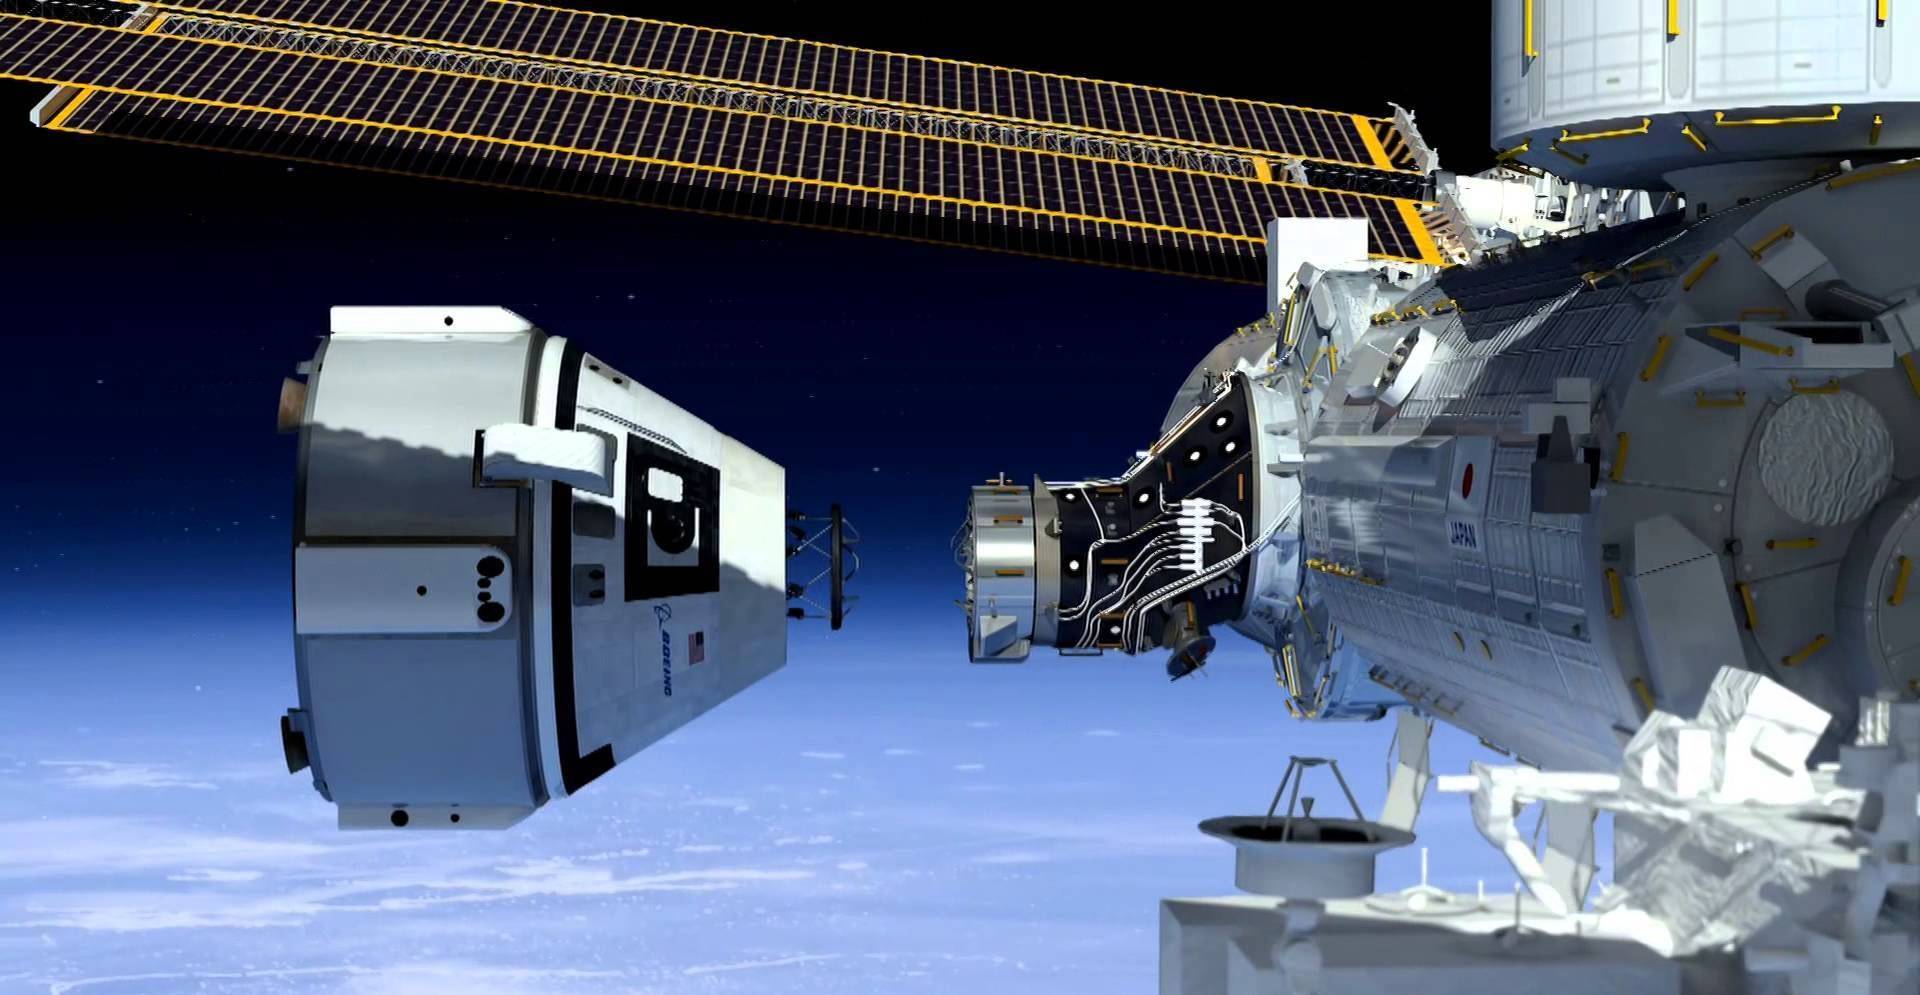 crew2宇航员将重新安置龙飞船以迎接波音starliner对接空间站